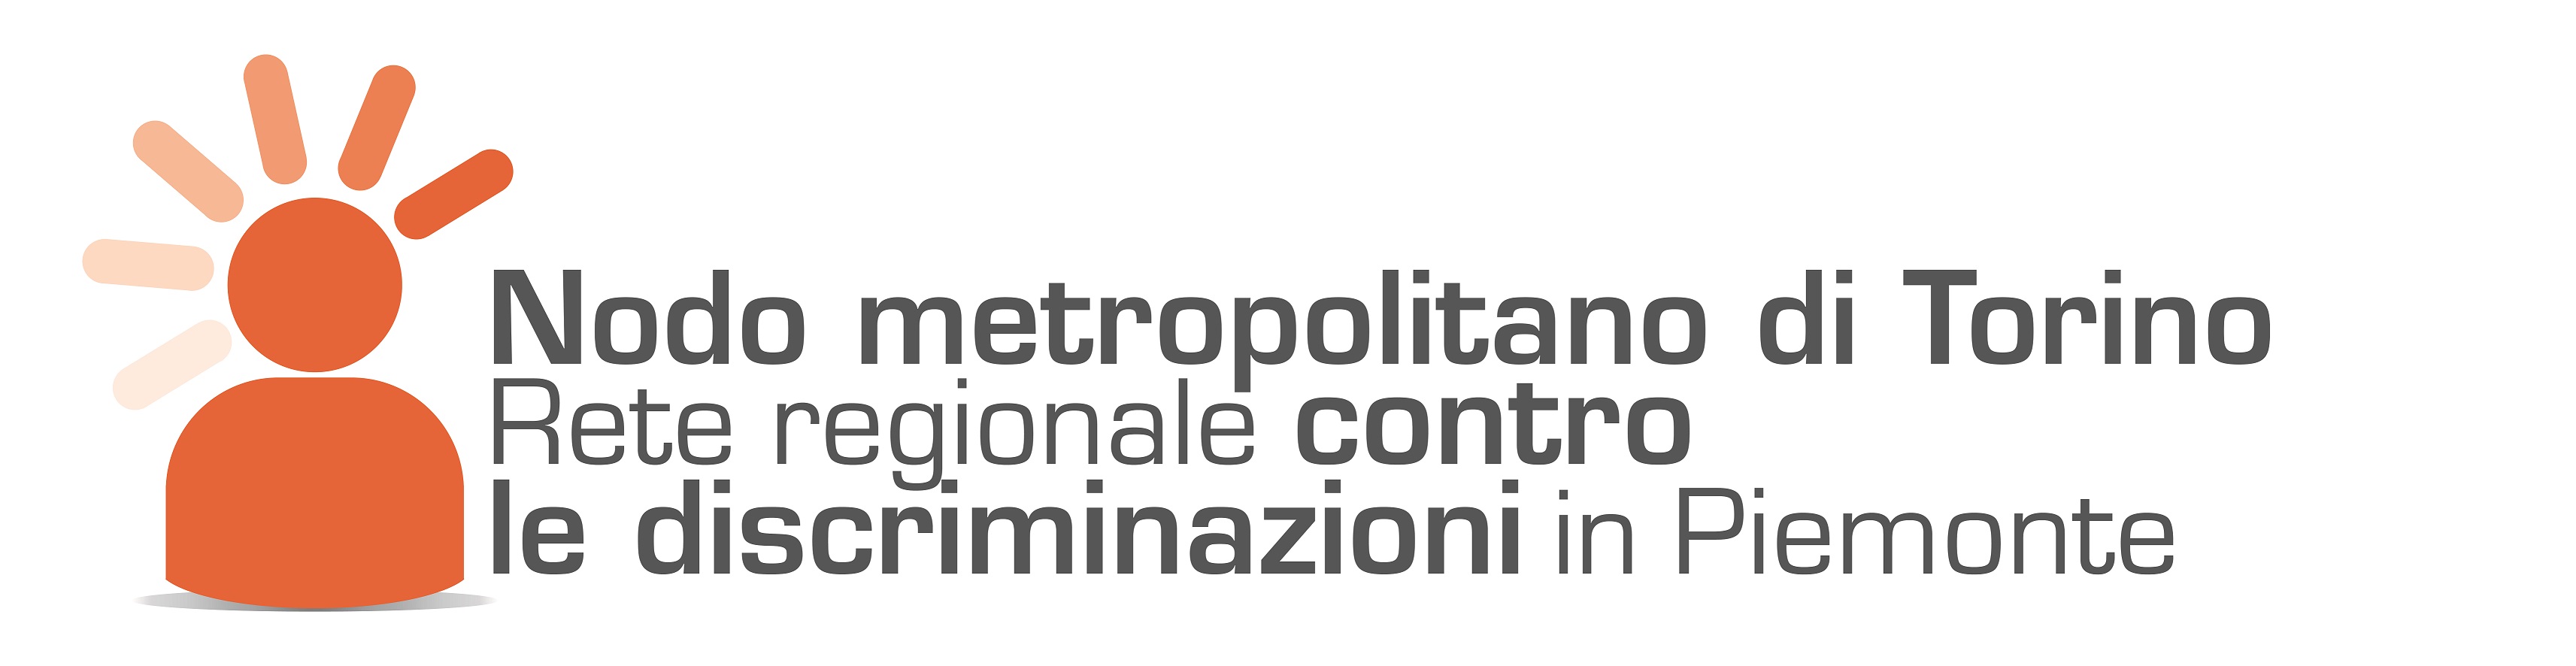 Logo discriminazioni nodo metropolitano di Torino leggero